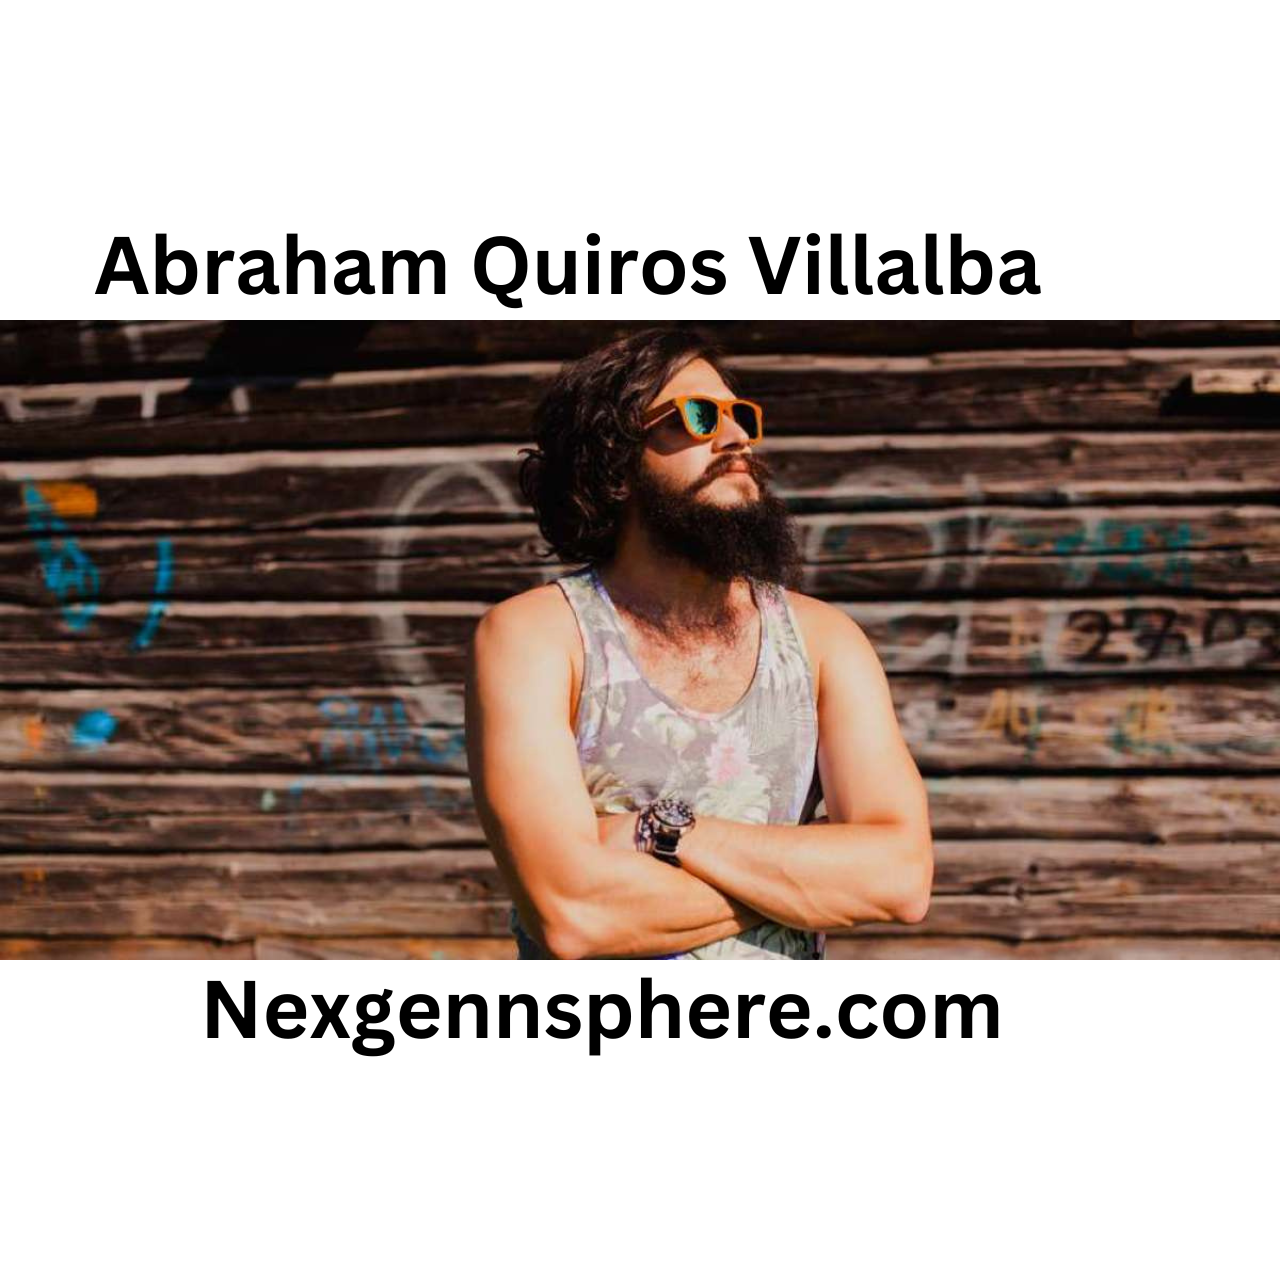 Abraham Quiros Villalba: A Visionary in the Making